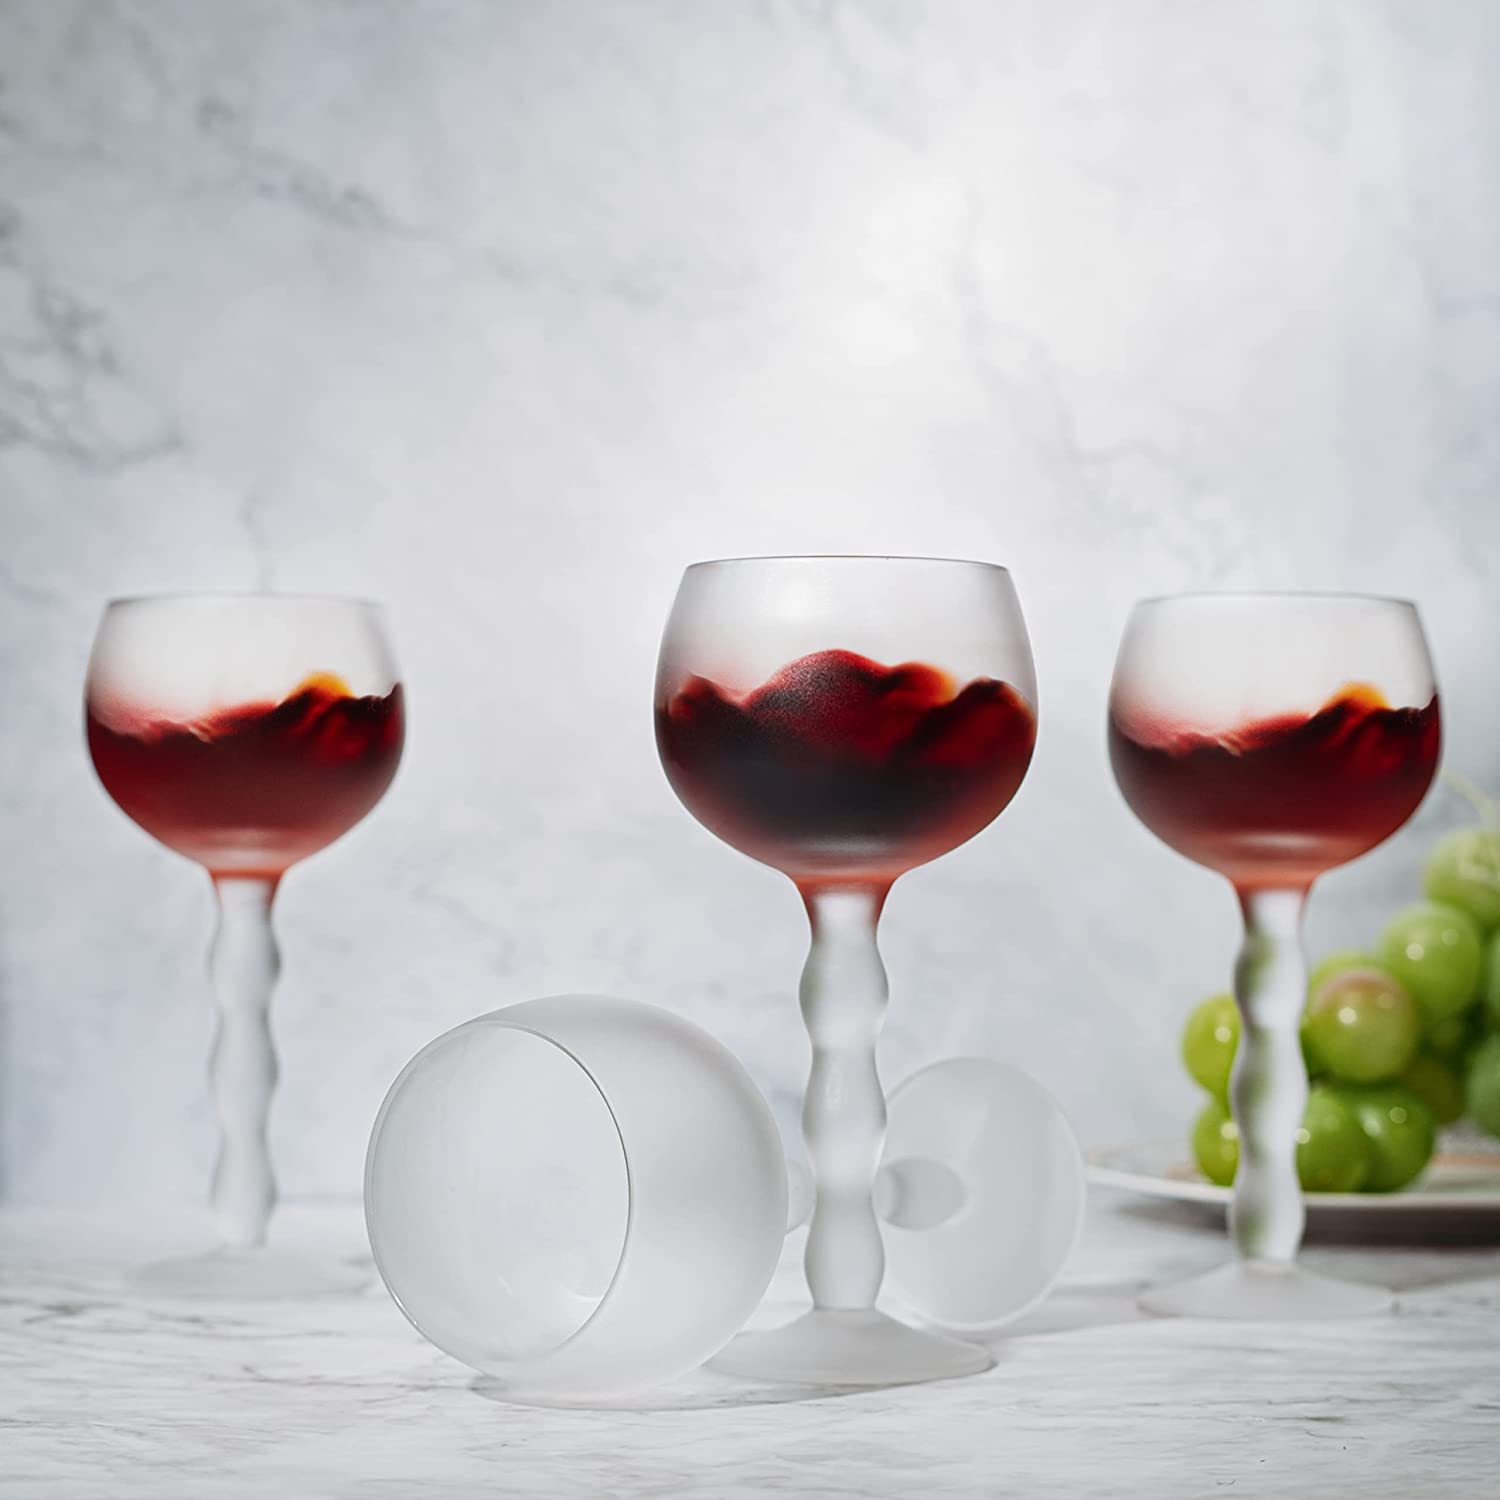 The Wine Savant Aesthetic Cloud Elegant Crystal Wine & Water Glasses, Hand  Blown, Premium Trendy Sand Blasted Glasses - Stemmed Red White Wine